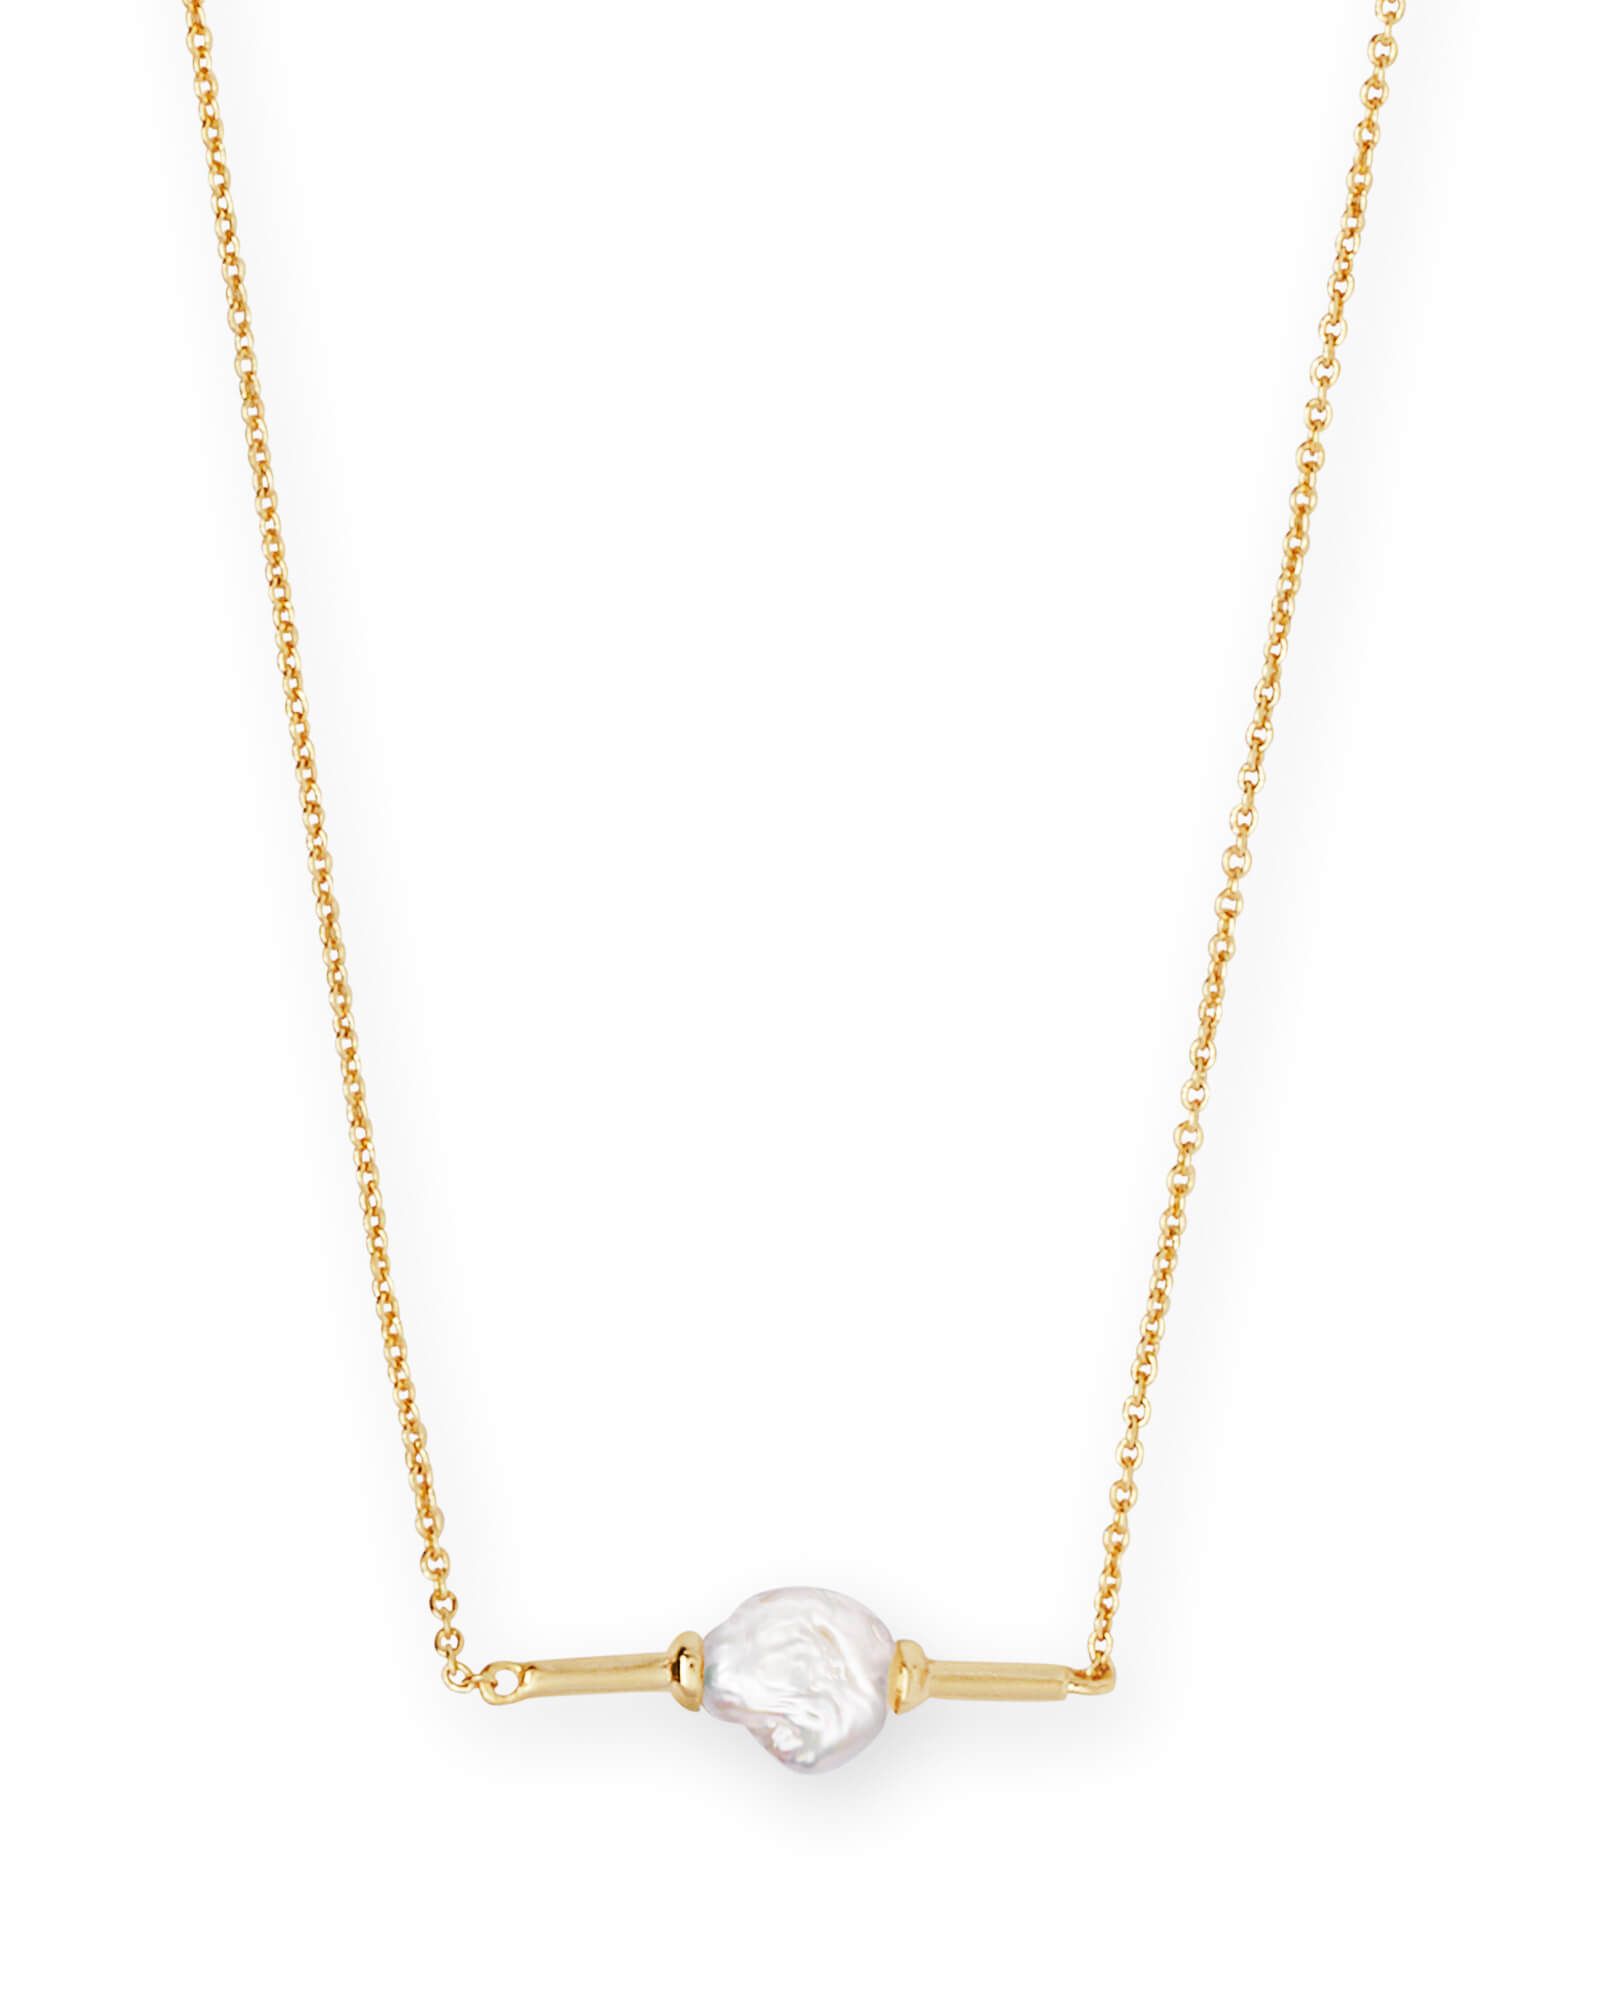 Emberly Gold Pendant Necklace in Pearl | Kendra Scott | Kendra Scott